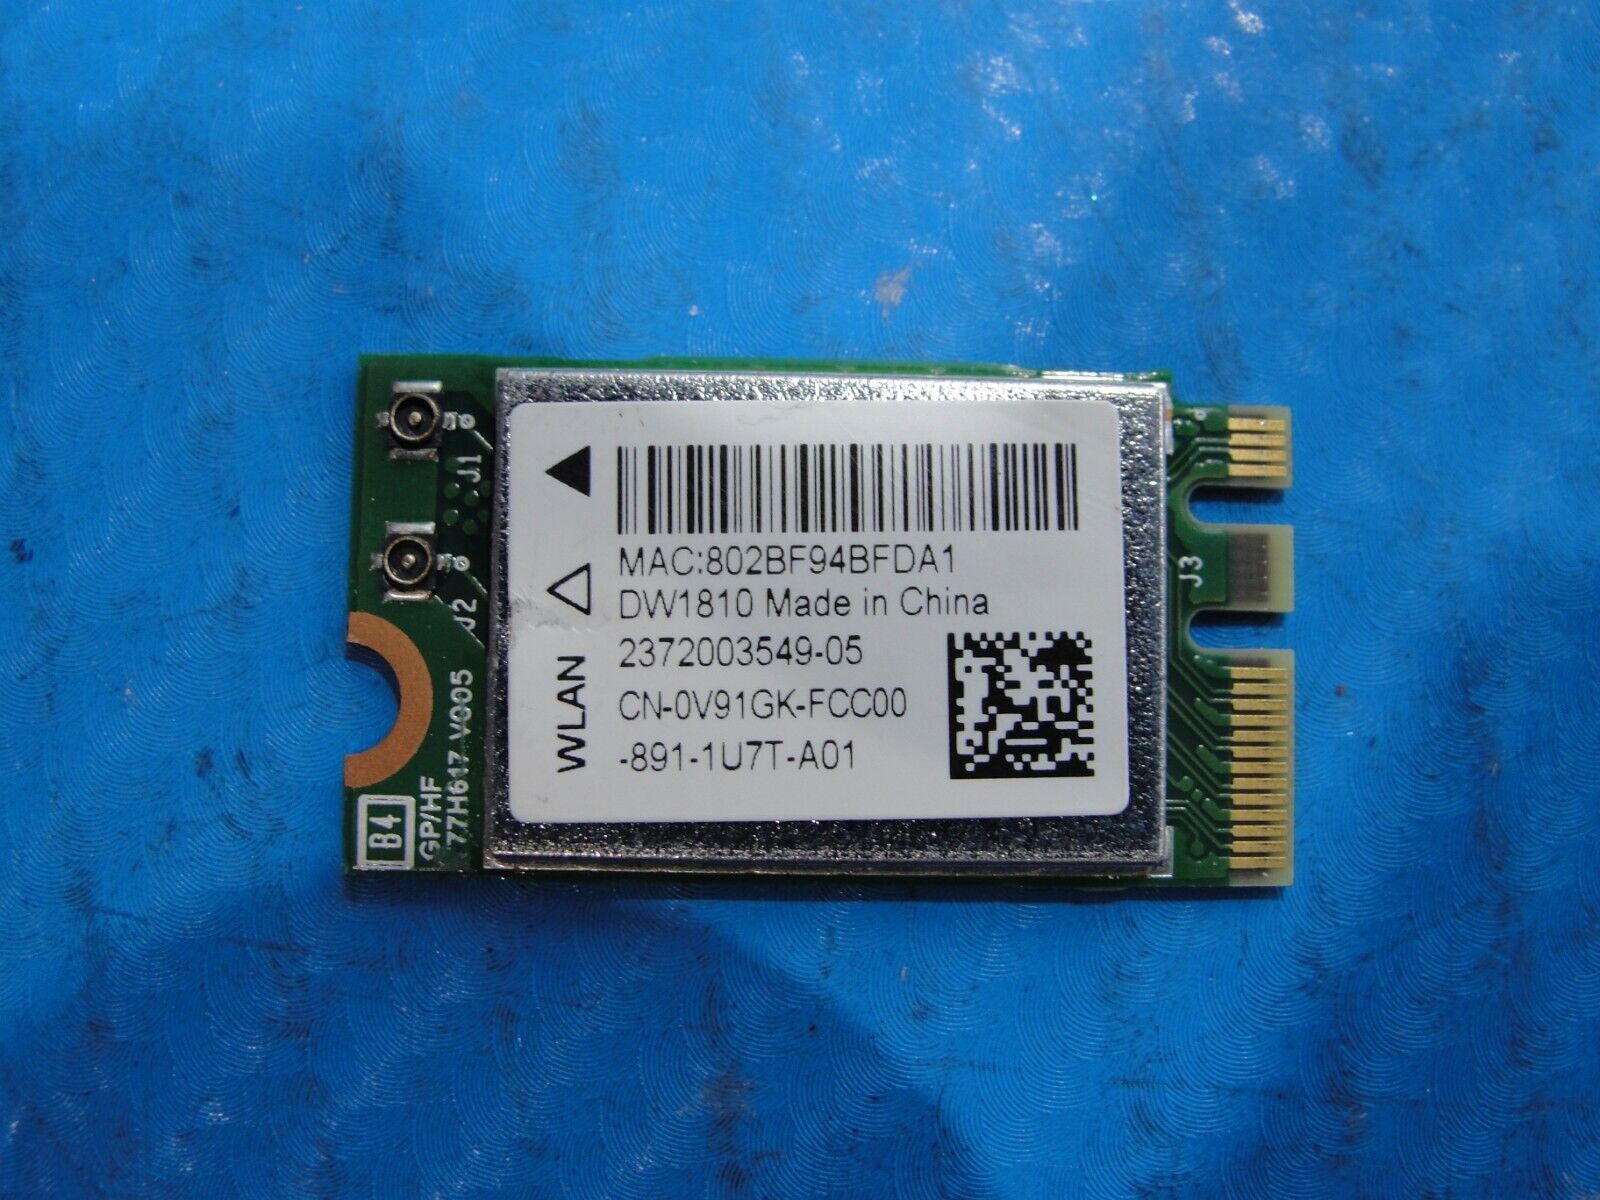 Dell Inspiron 7375 13.3" Genuine Laptop Wireless WiFi Card V91GK QCNFA435